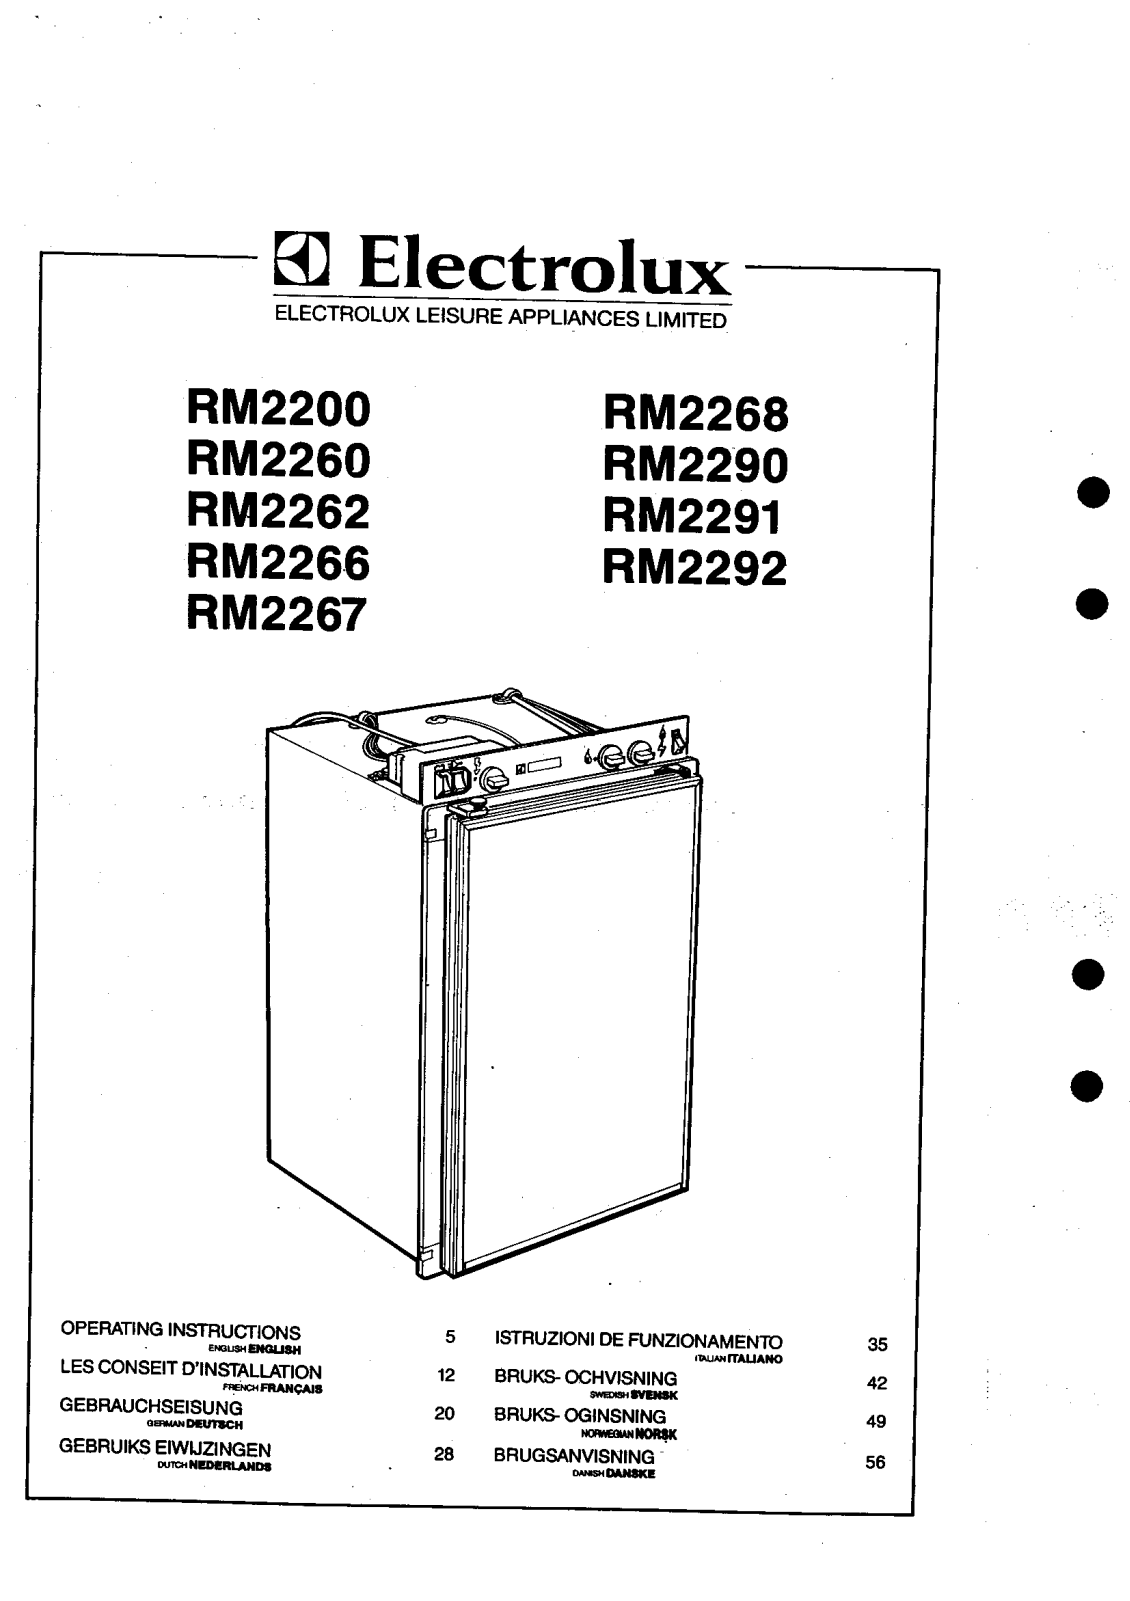 electrolux rm 2200, rm2260, rm 2262, rm 2266, rm 2267 User Manual